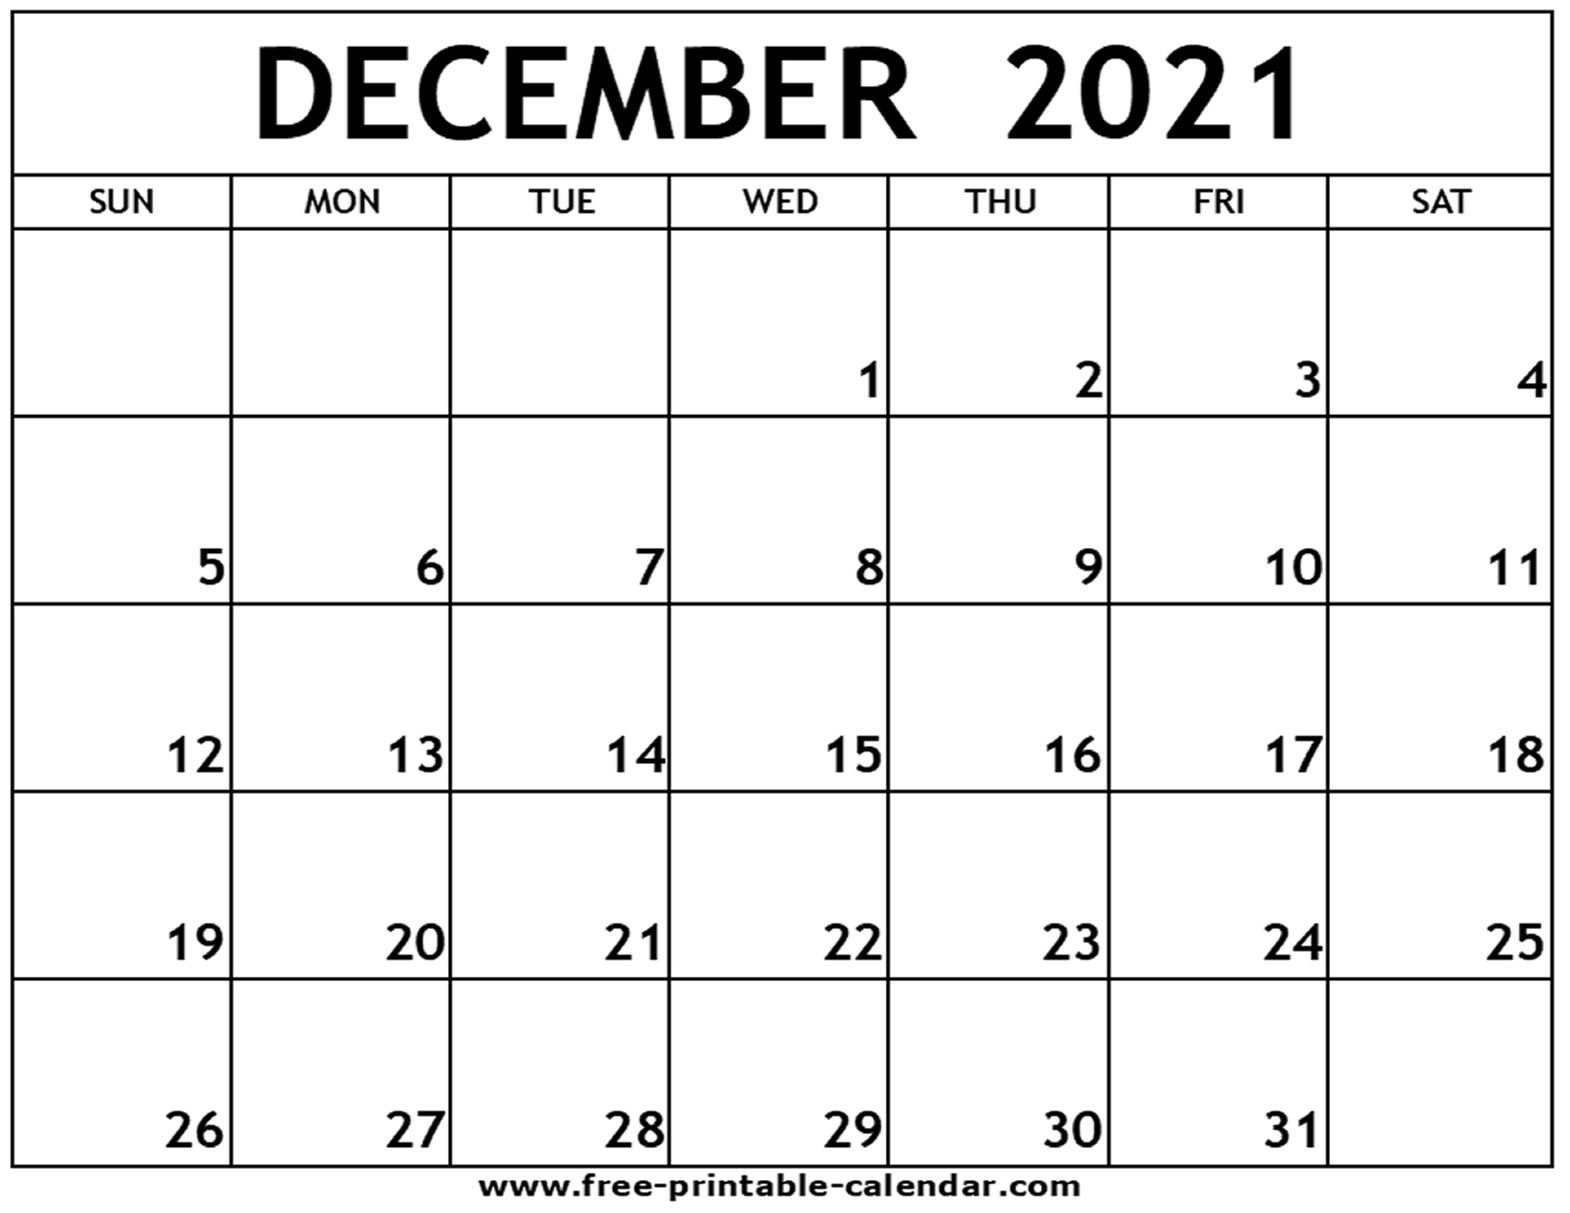 December 2021 Printable Calendar - Free-Printable-Calendar